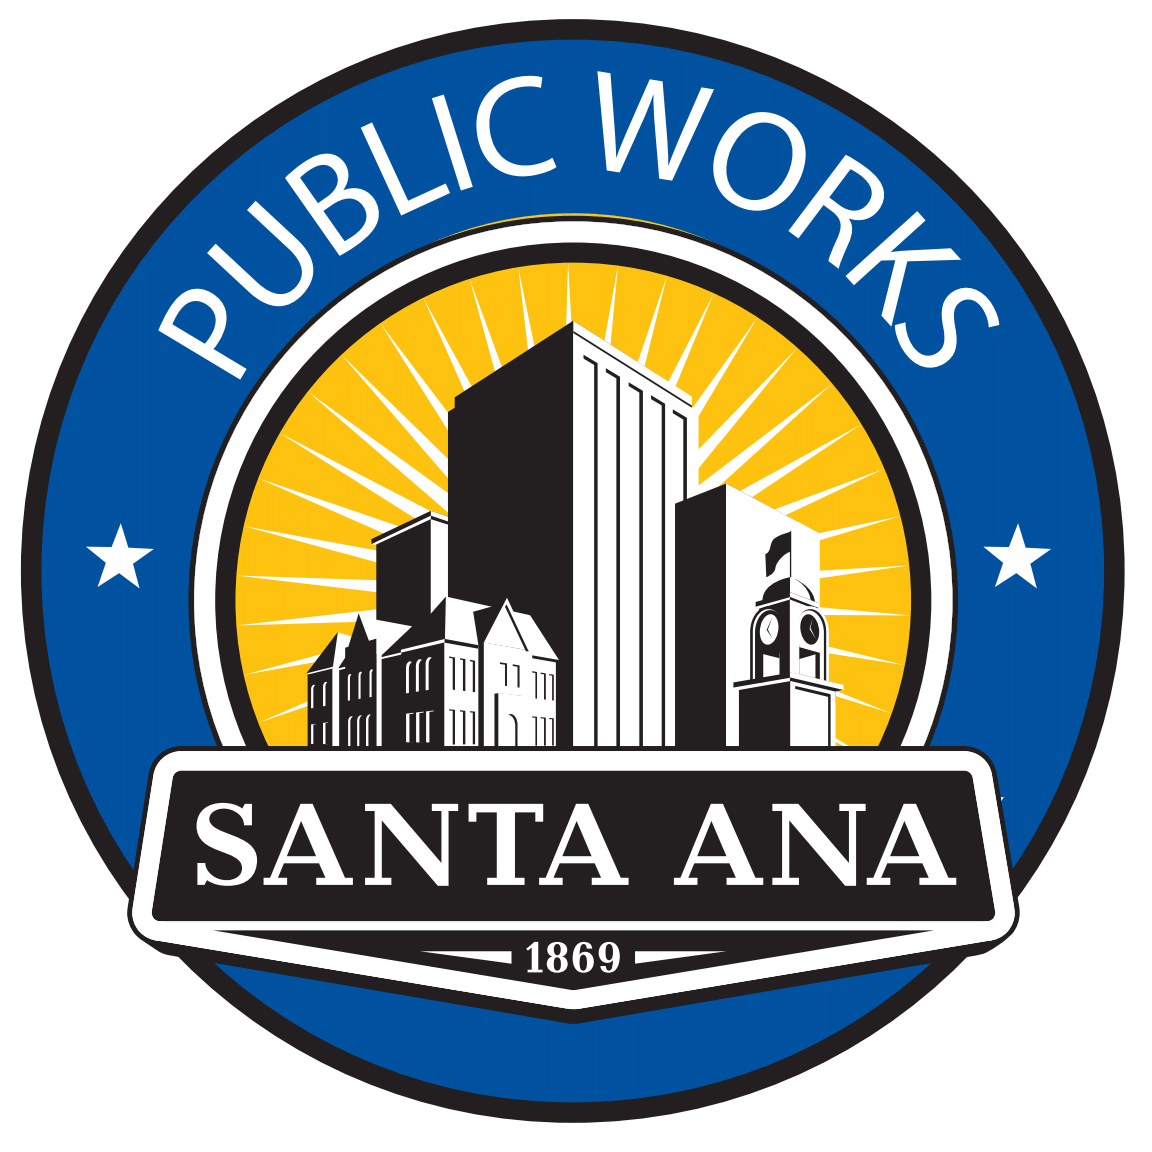 Santa Ana Public Works Logo1